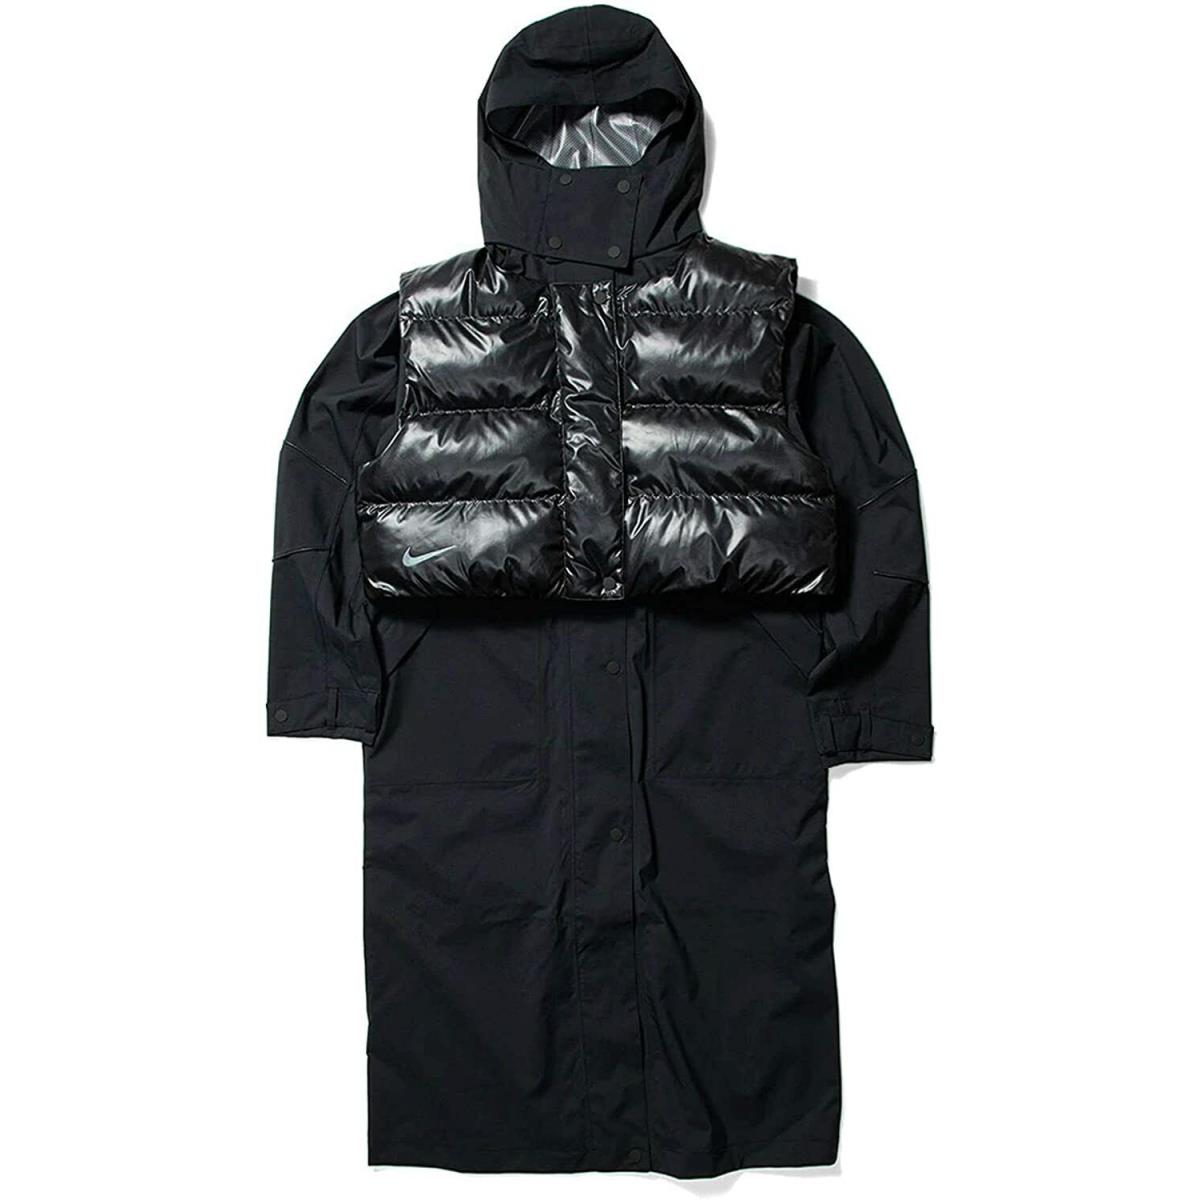 Nike Sportswear City Ready Hooded Jacket CJ4018-010 Black Size Xxl